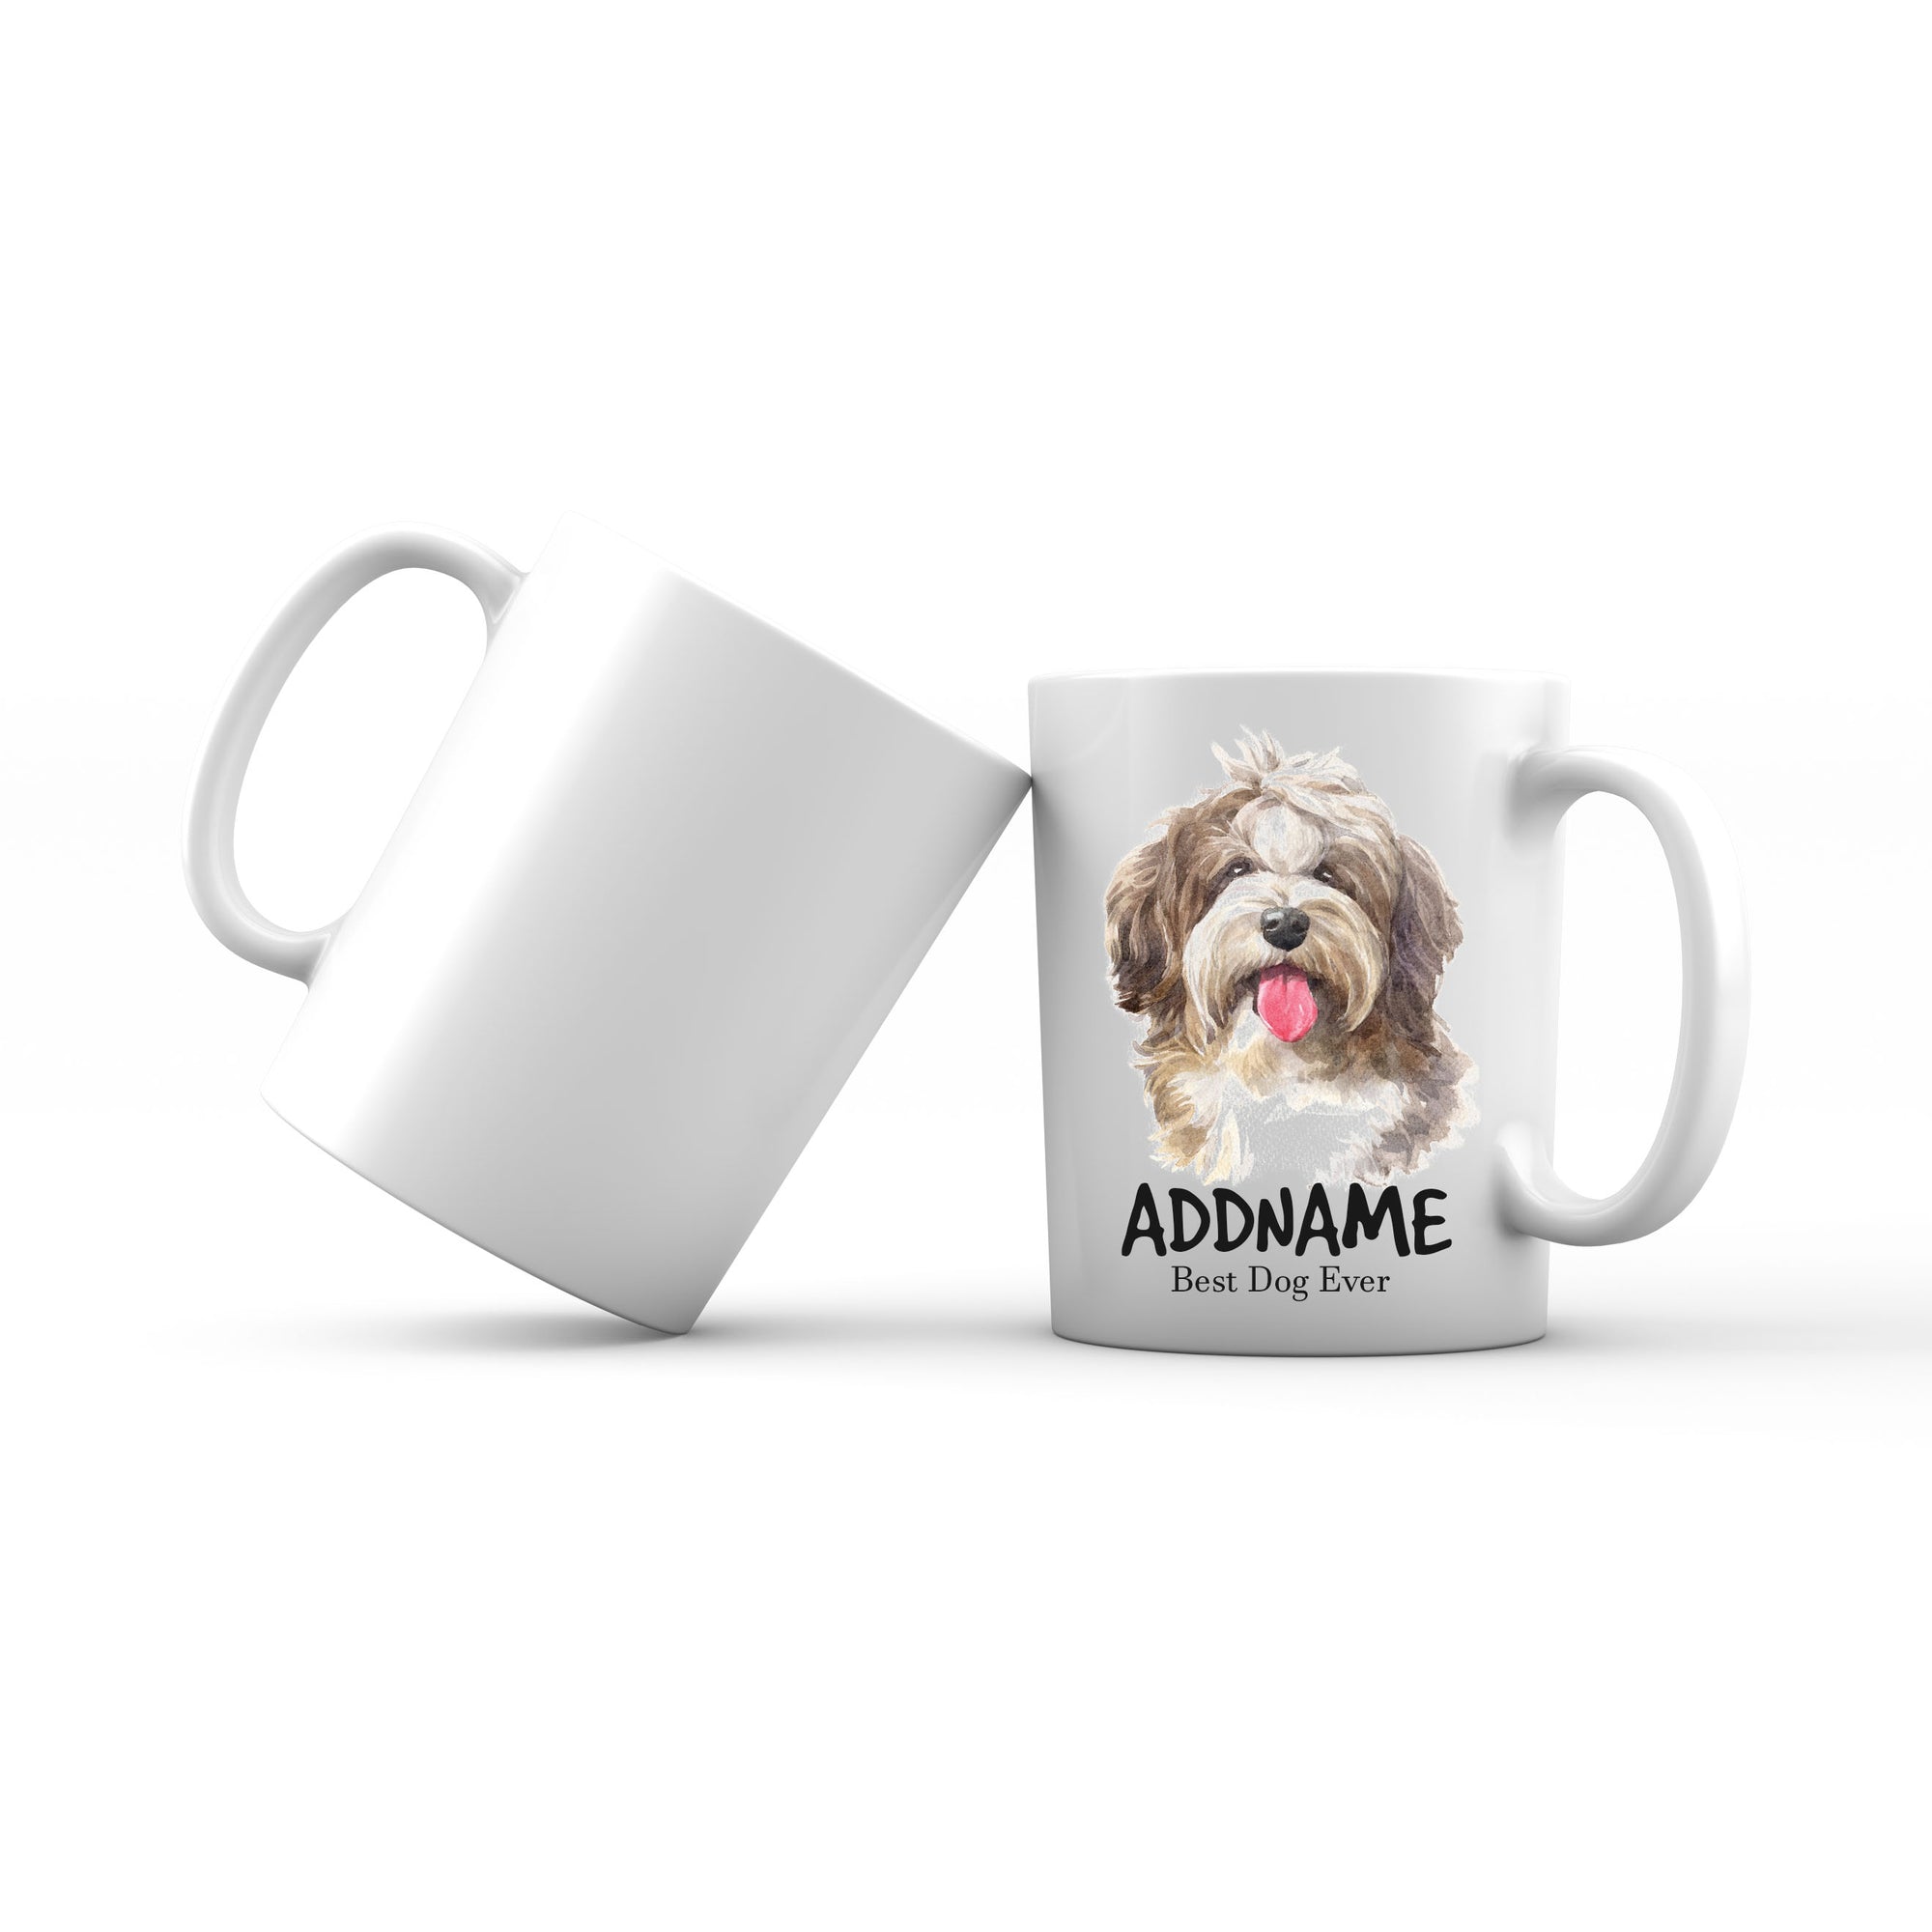 Watercolor Dog Shaggy Havanese Best Dog Ever Addname Mug